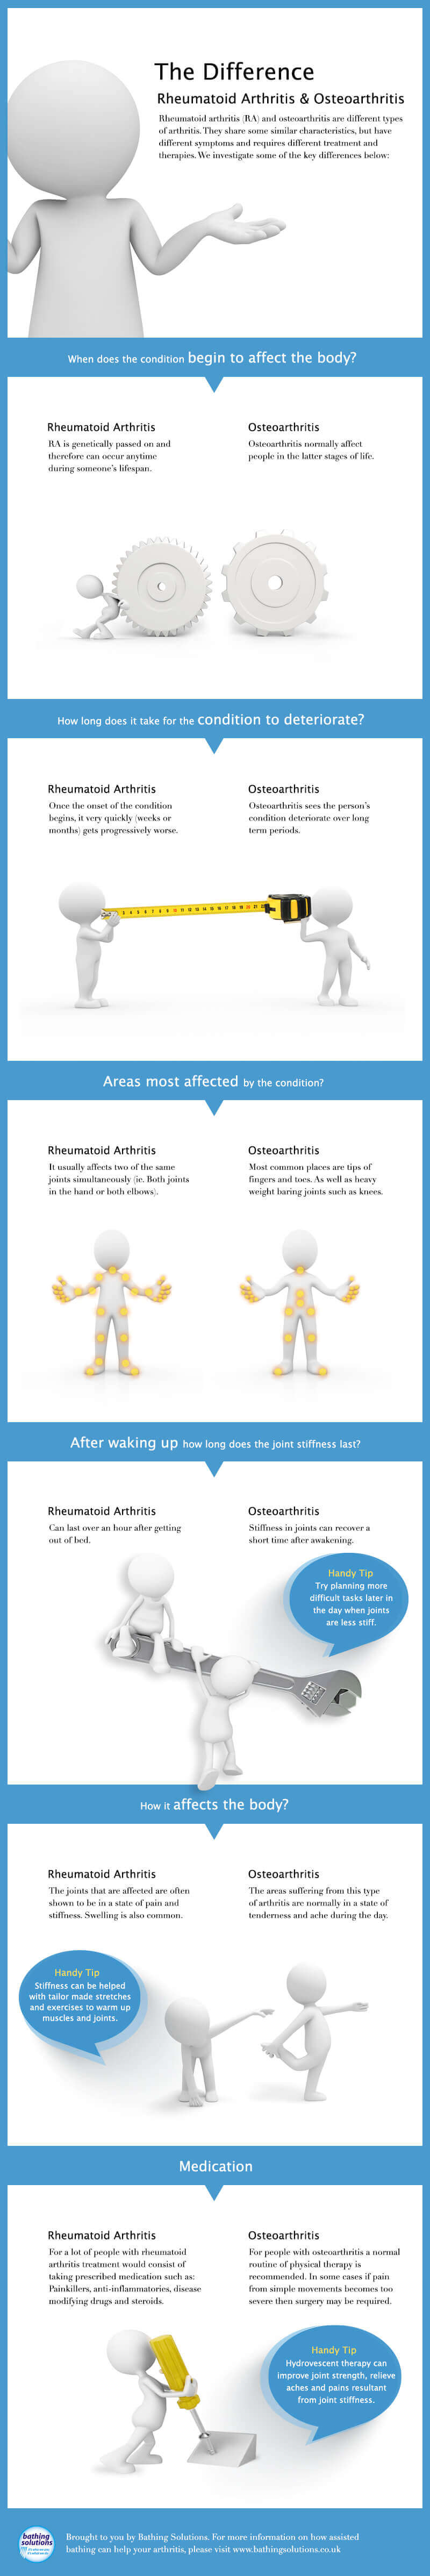 Difference between Rheumatoid Arthritis and Osteoarthritis Infographic